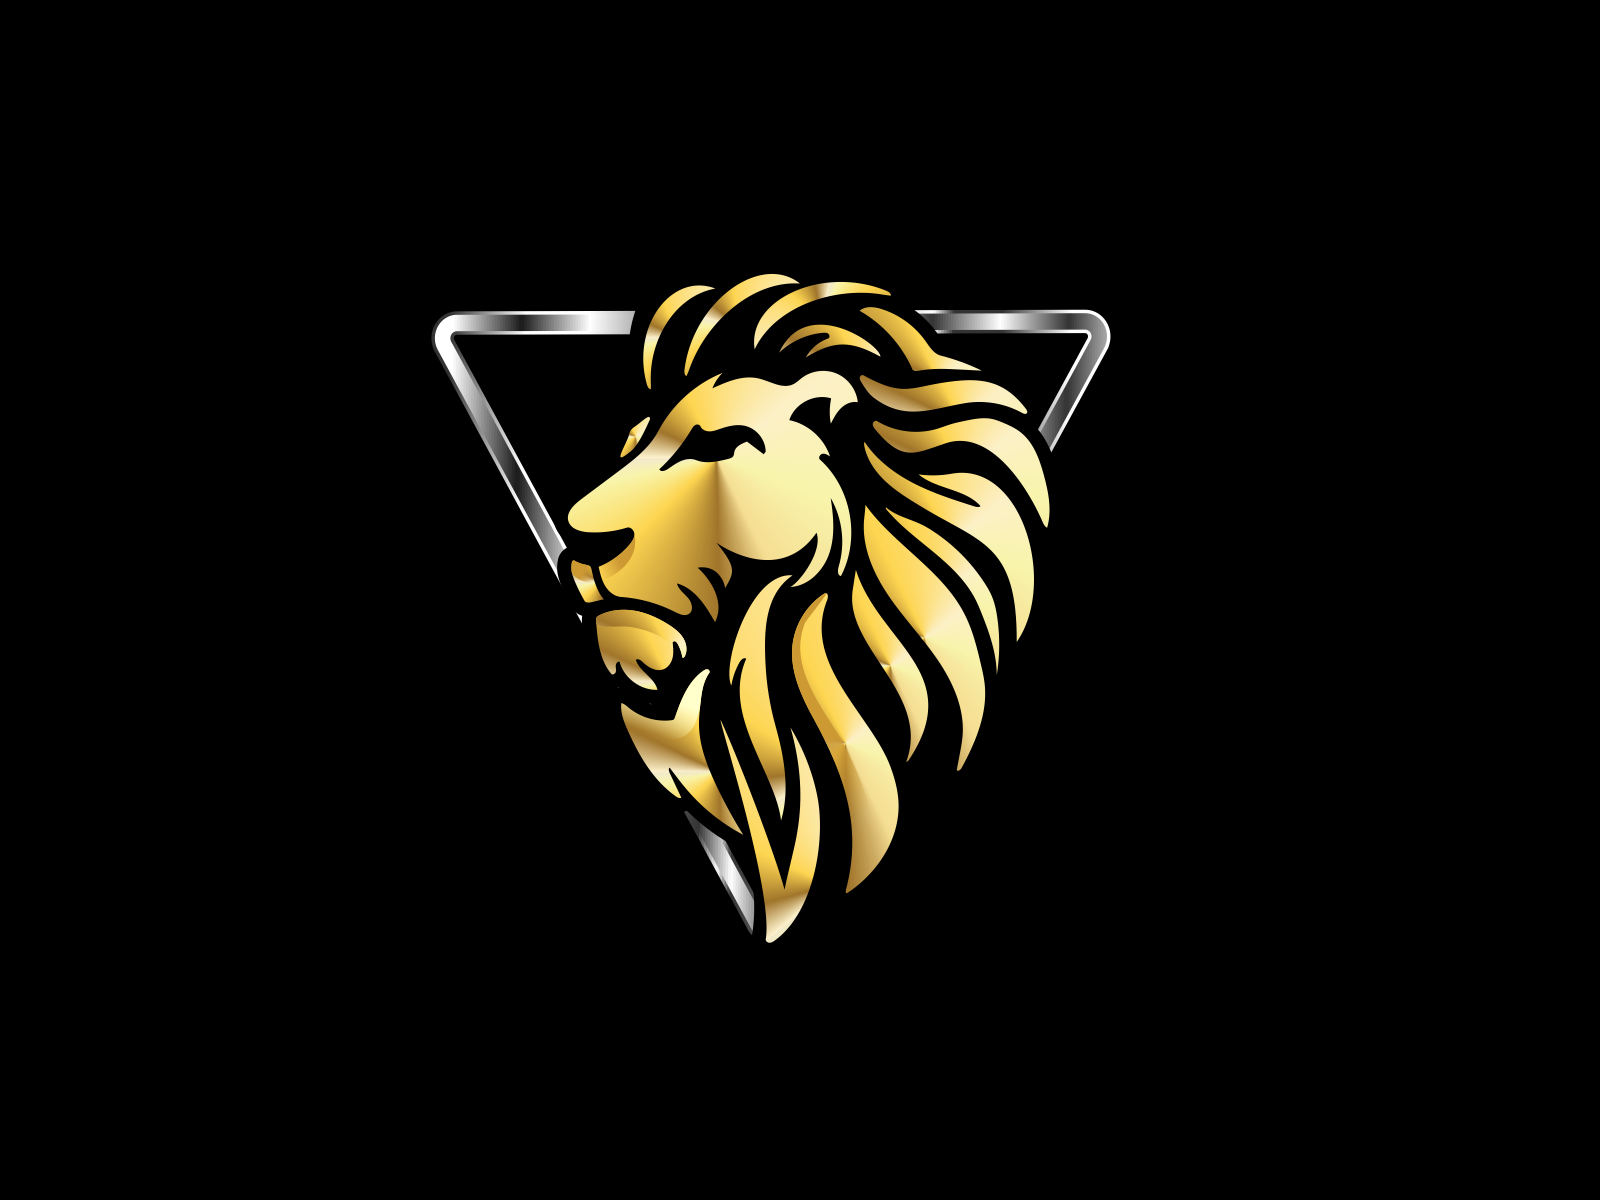 Three Golden Lions Logo